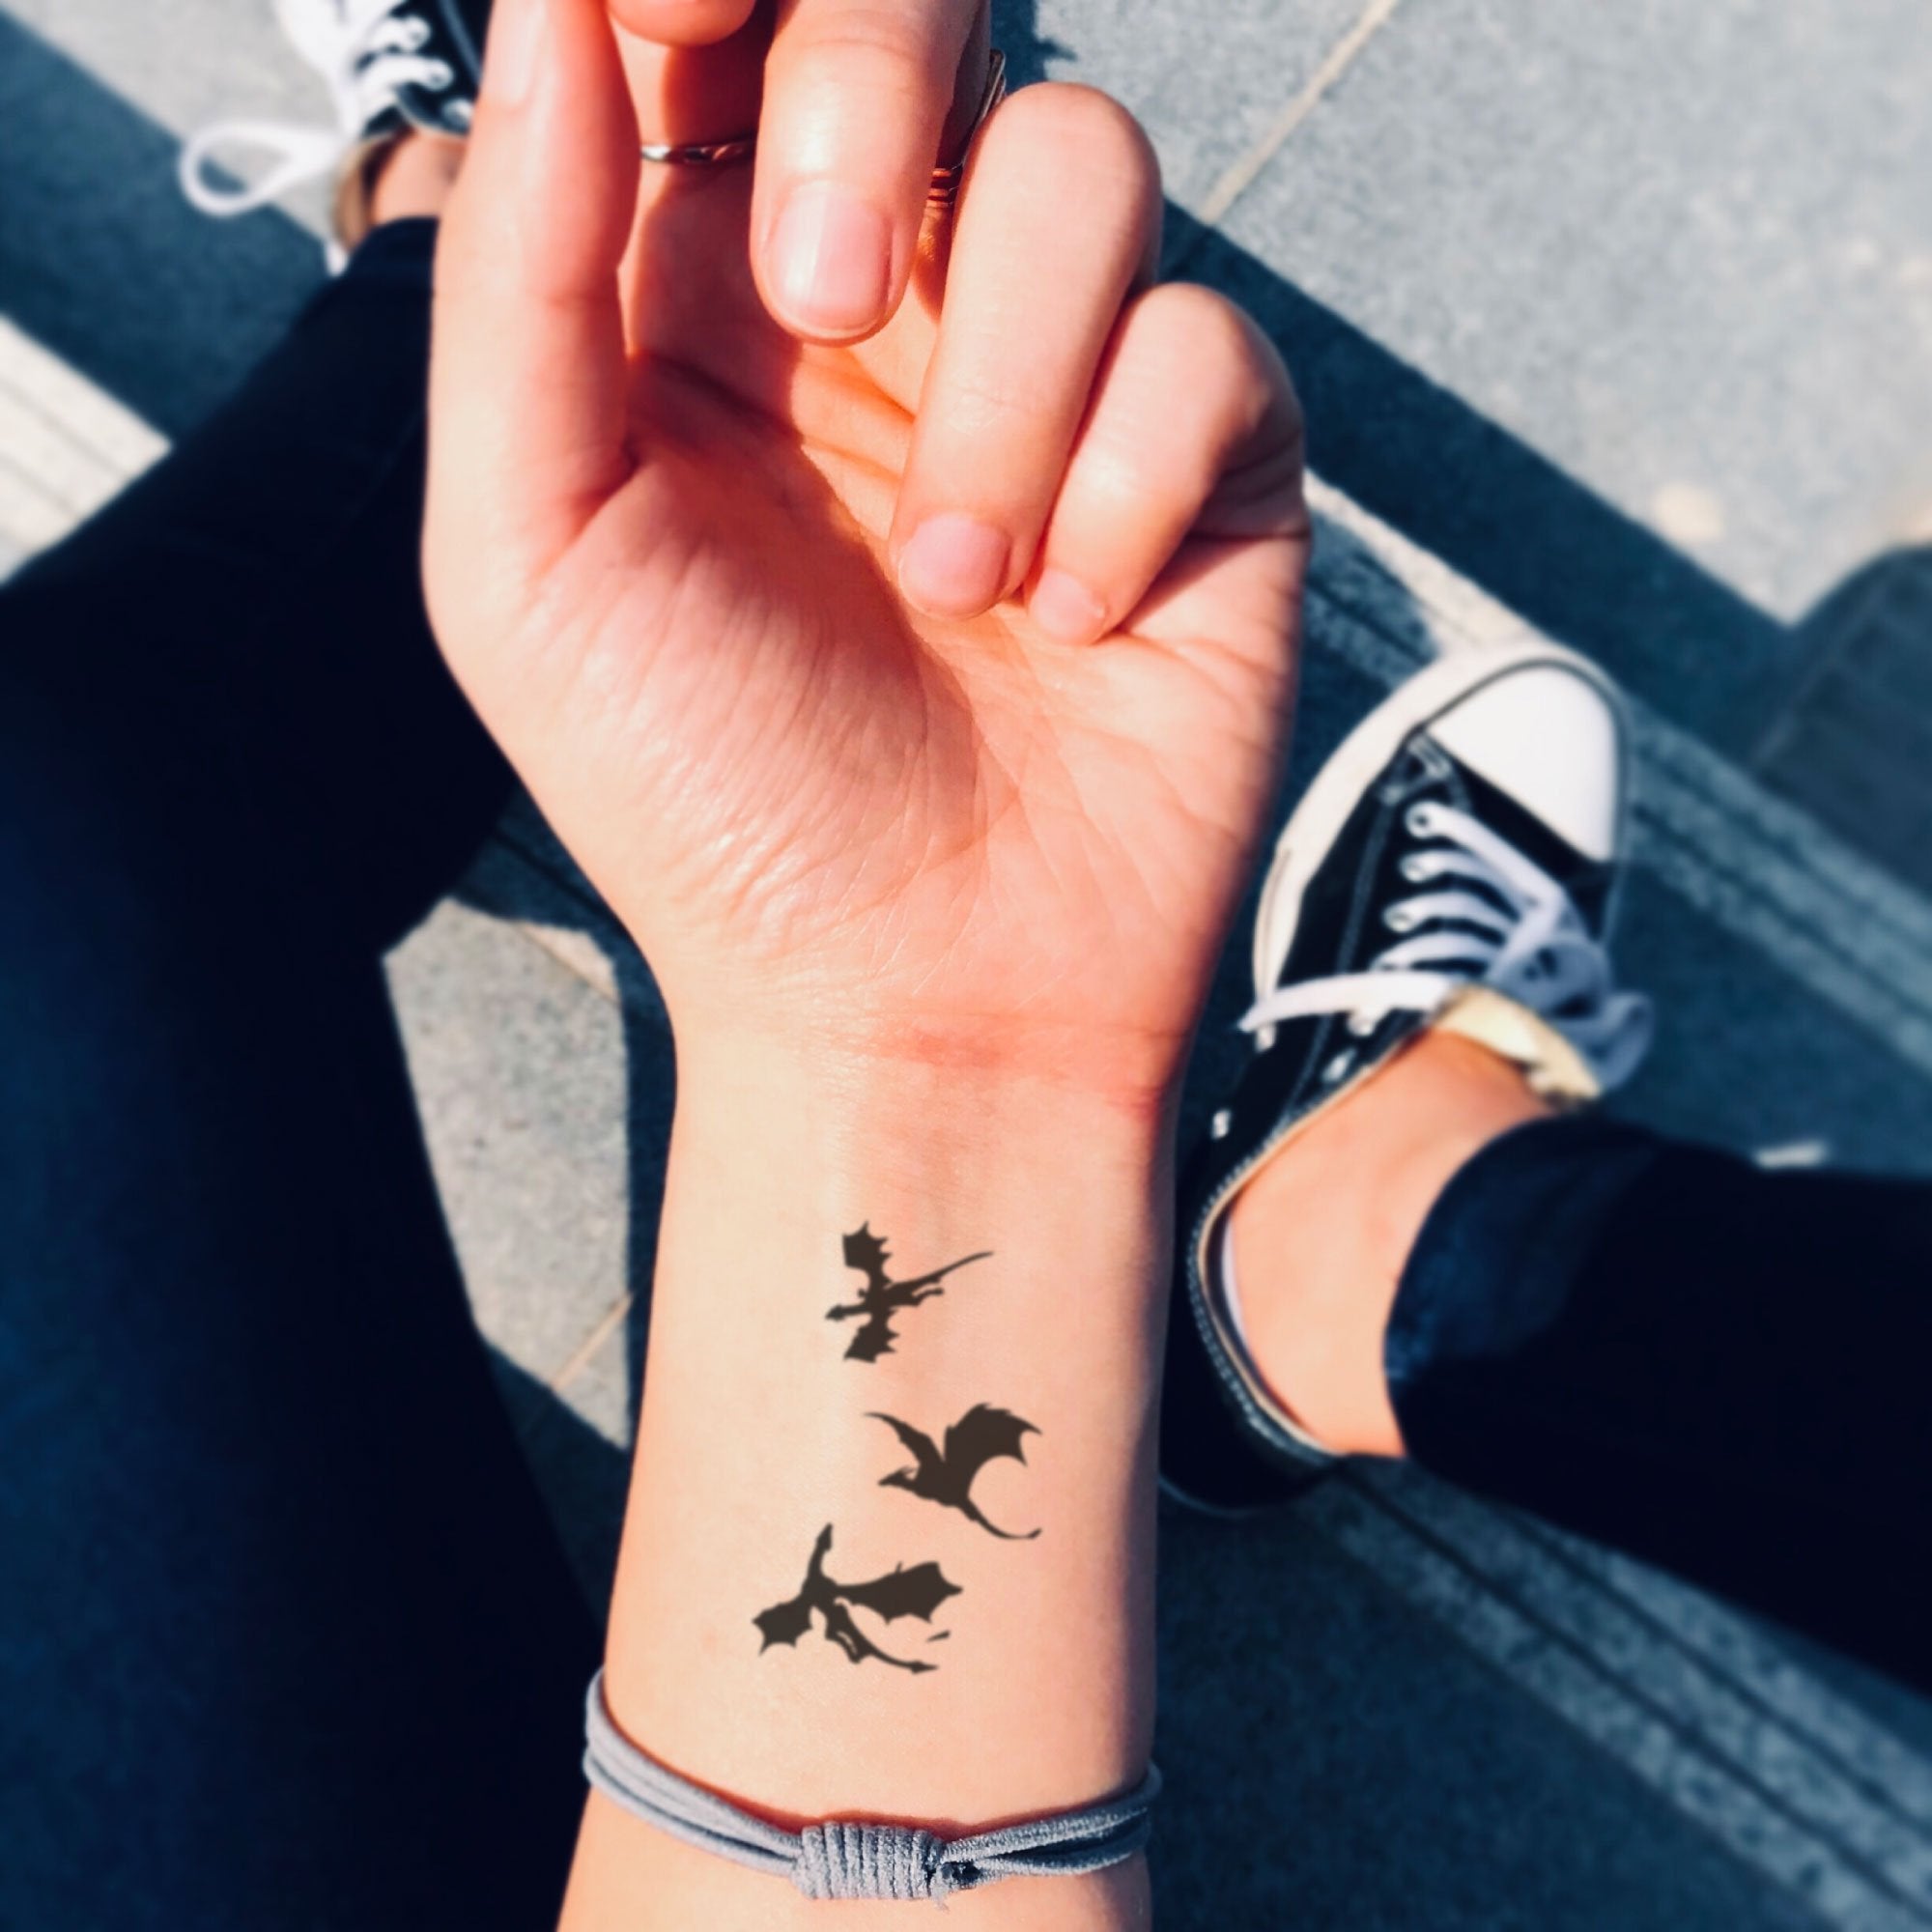 tattoo #tats #tattooed #ink #inked #finger #fingertattoo #playstation  #playstationcontroller #gaming #game #gamingtattoo #smalltattoo #tinytattoo  #tattooideas …